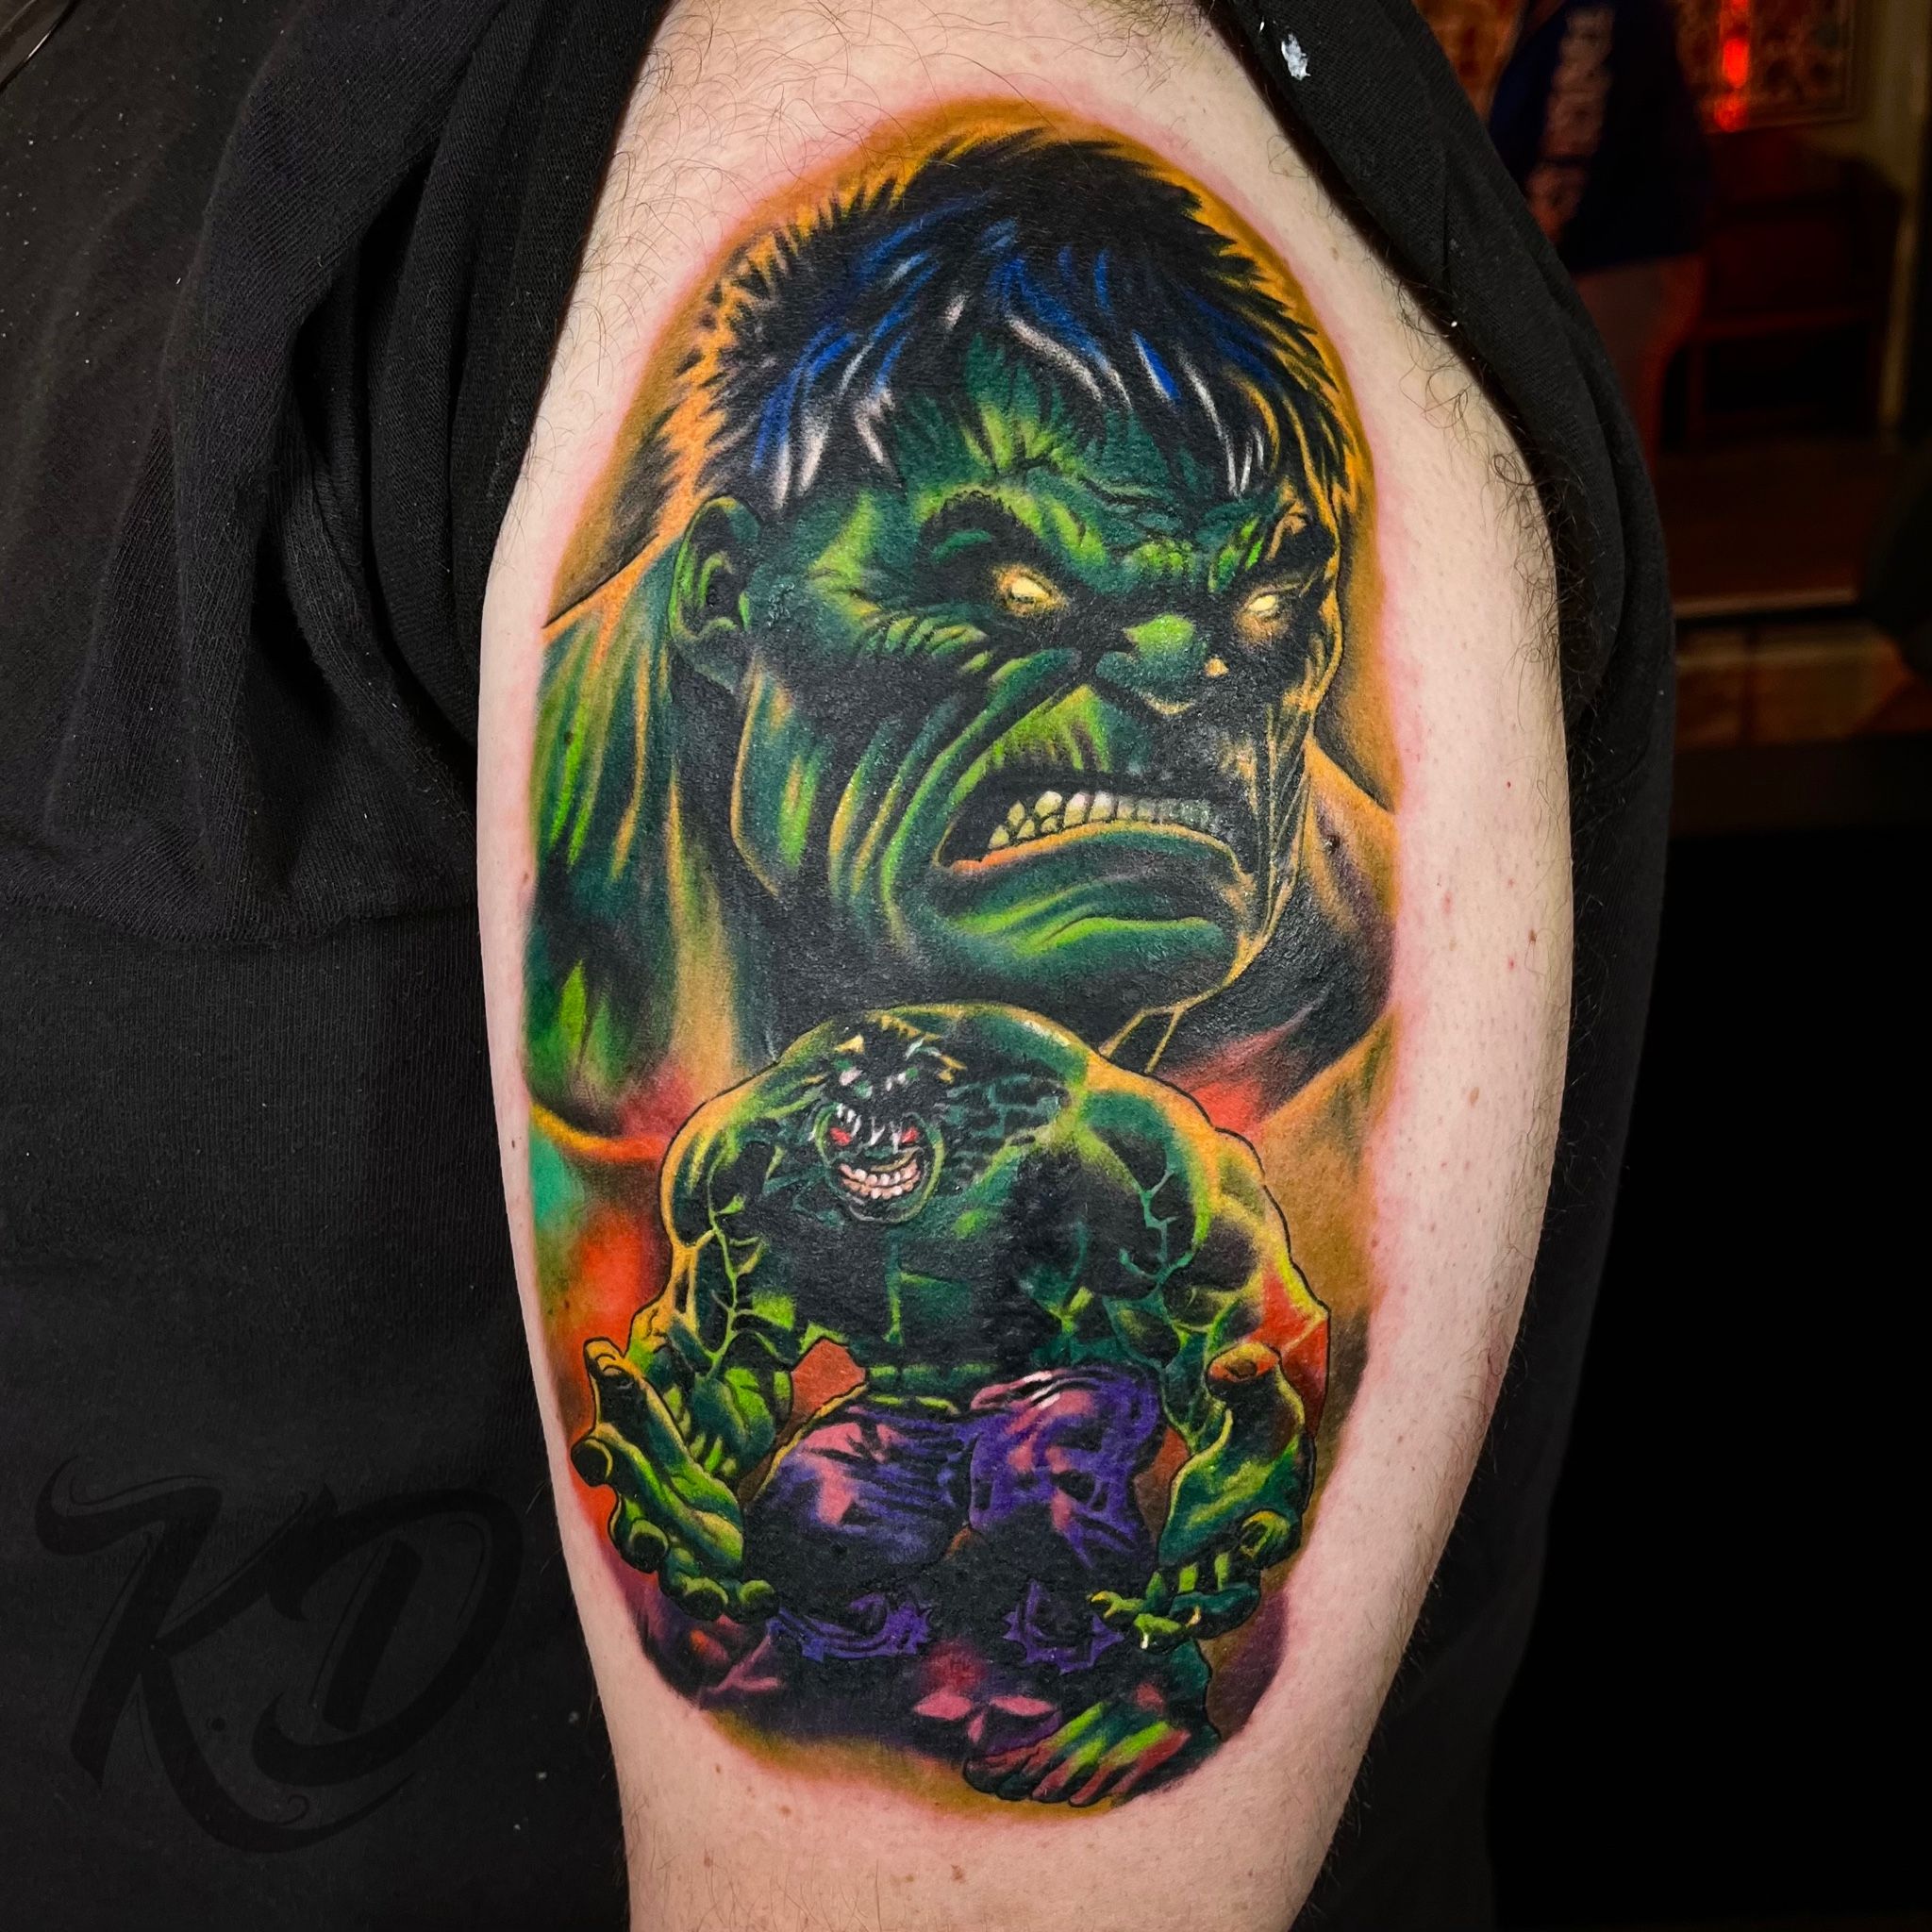 Hulk tattoo design Black and Grey version 2 by funktgreen on DeviantArt